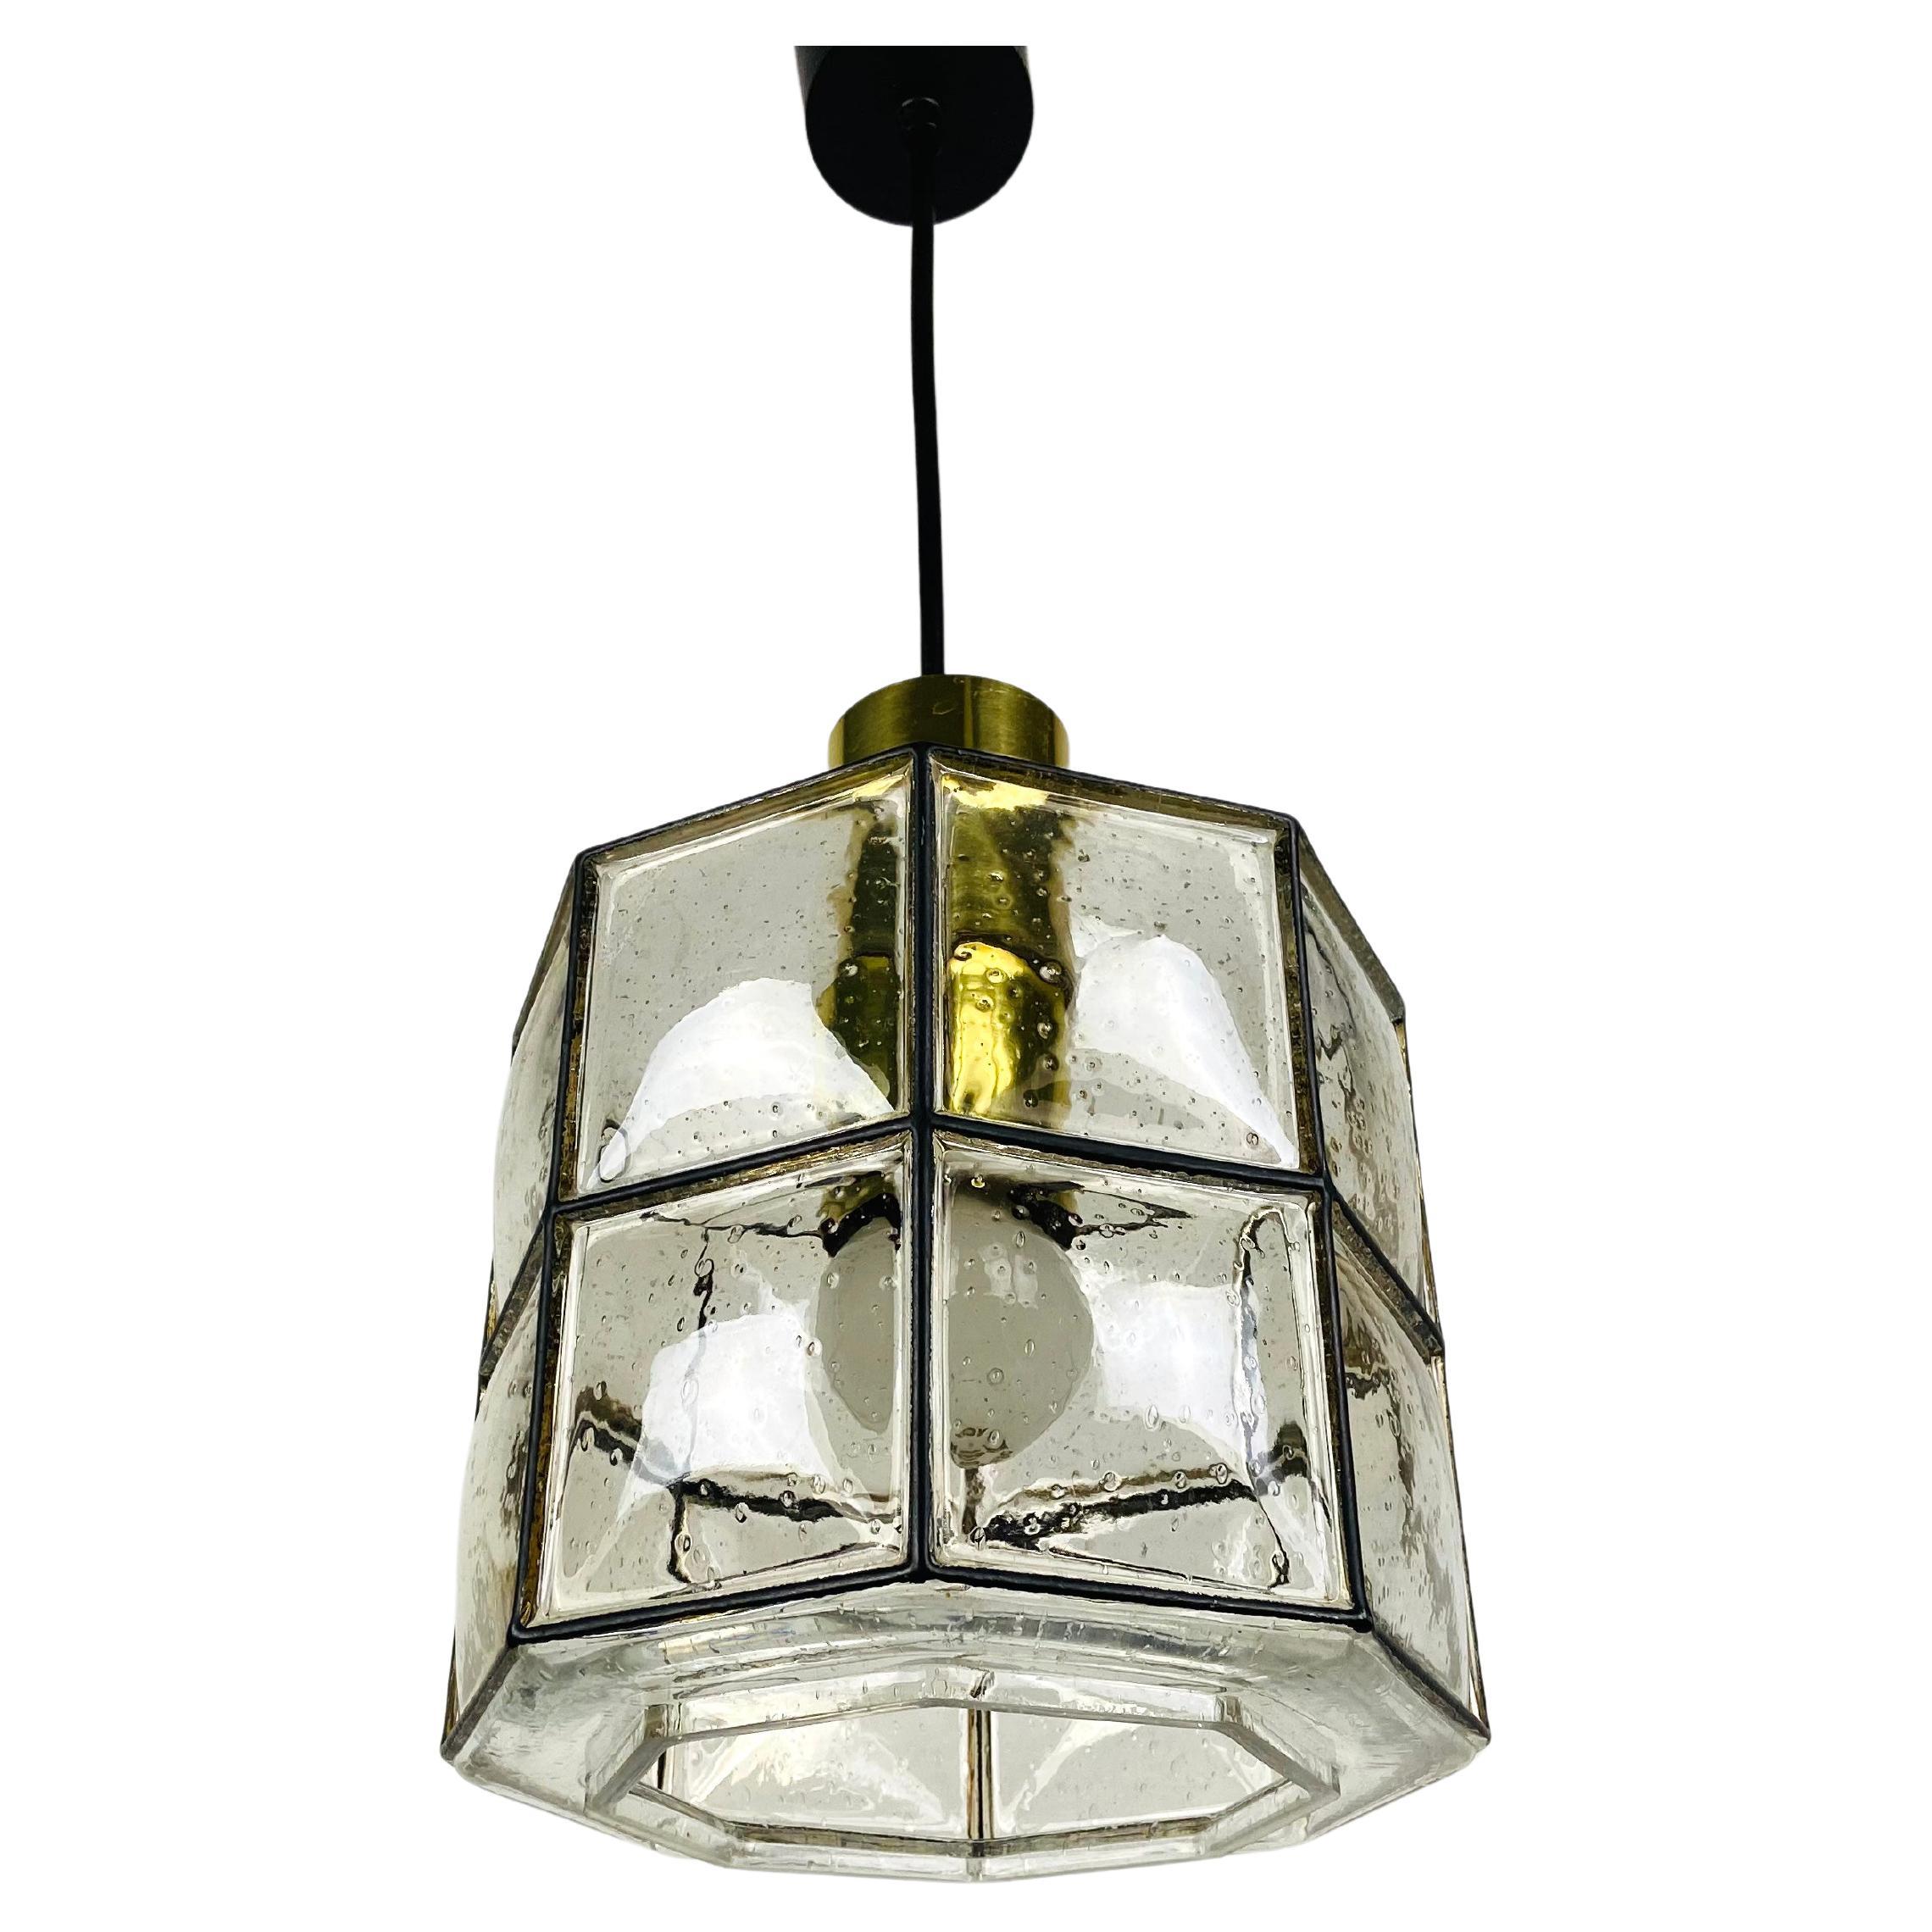 Midcentury Iron and Bubble Glass Pendant Lamp by Glashütte Limburg, 1960s For Sale